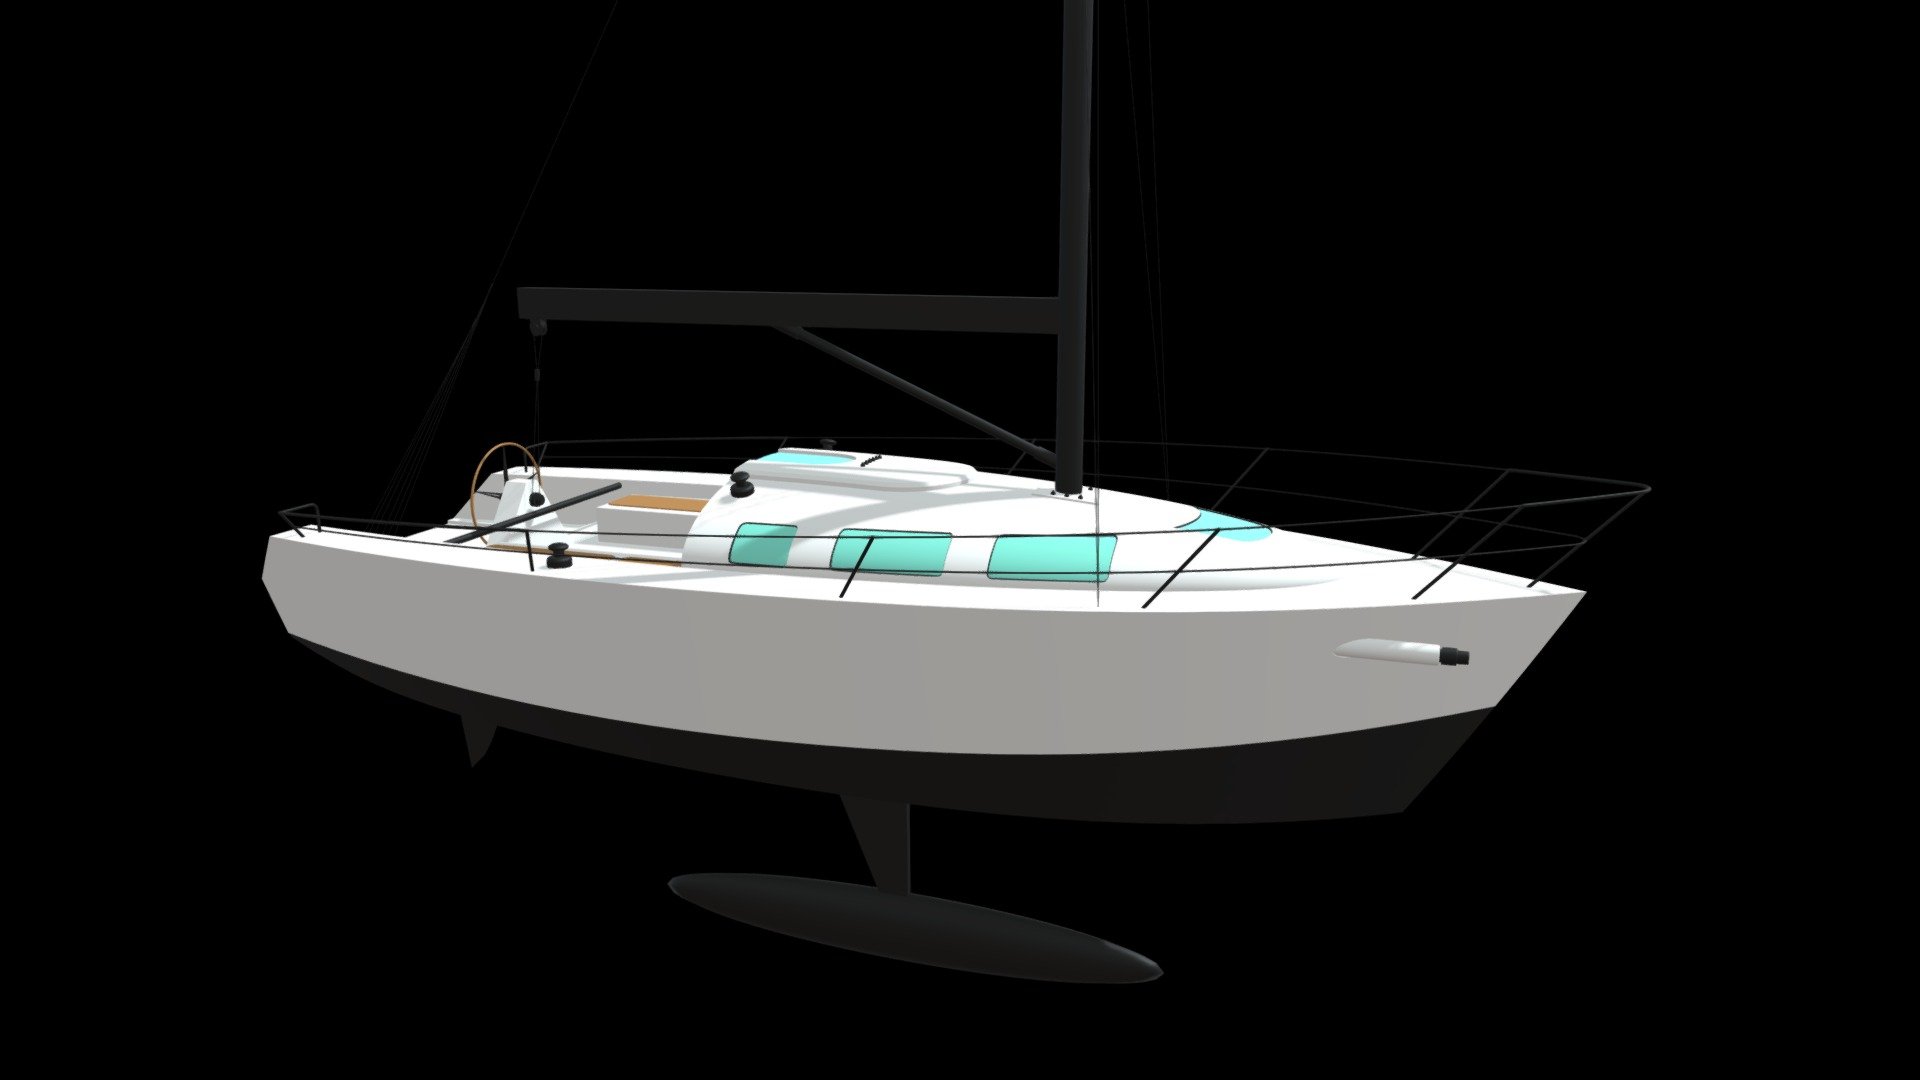 Real Scale Beneteau First 34.7 Sailing Boat

Made with Rhinoceros 3d - Real Scale Beneteau First 34.7 Sailing Boat - 3D model by NJWarin (@N.J.Warin) 3d model